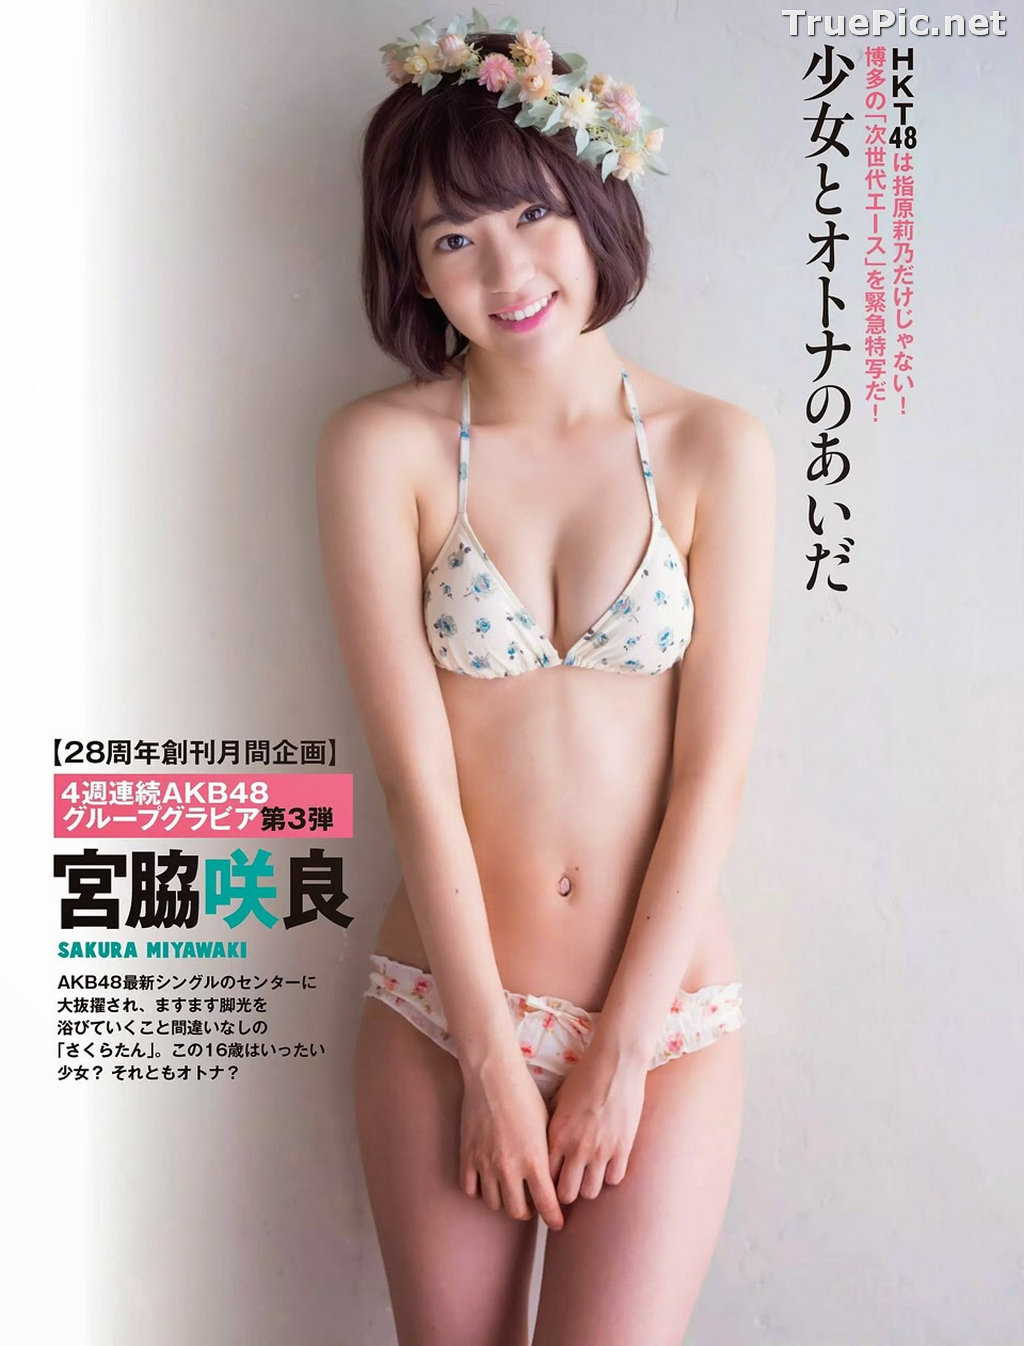 Image Japanese Singer and Actress - Sakura Miyawaki (宮脇咲良) - Sexy Picture Collection 2021 - TruePic.net - Picture-98